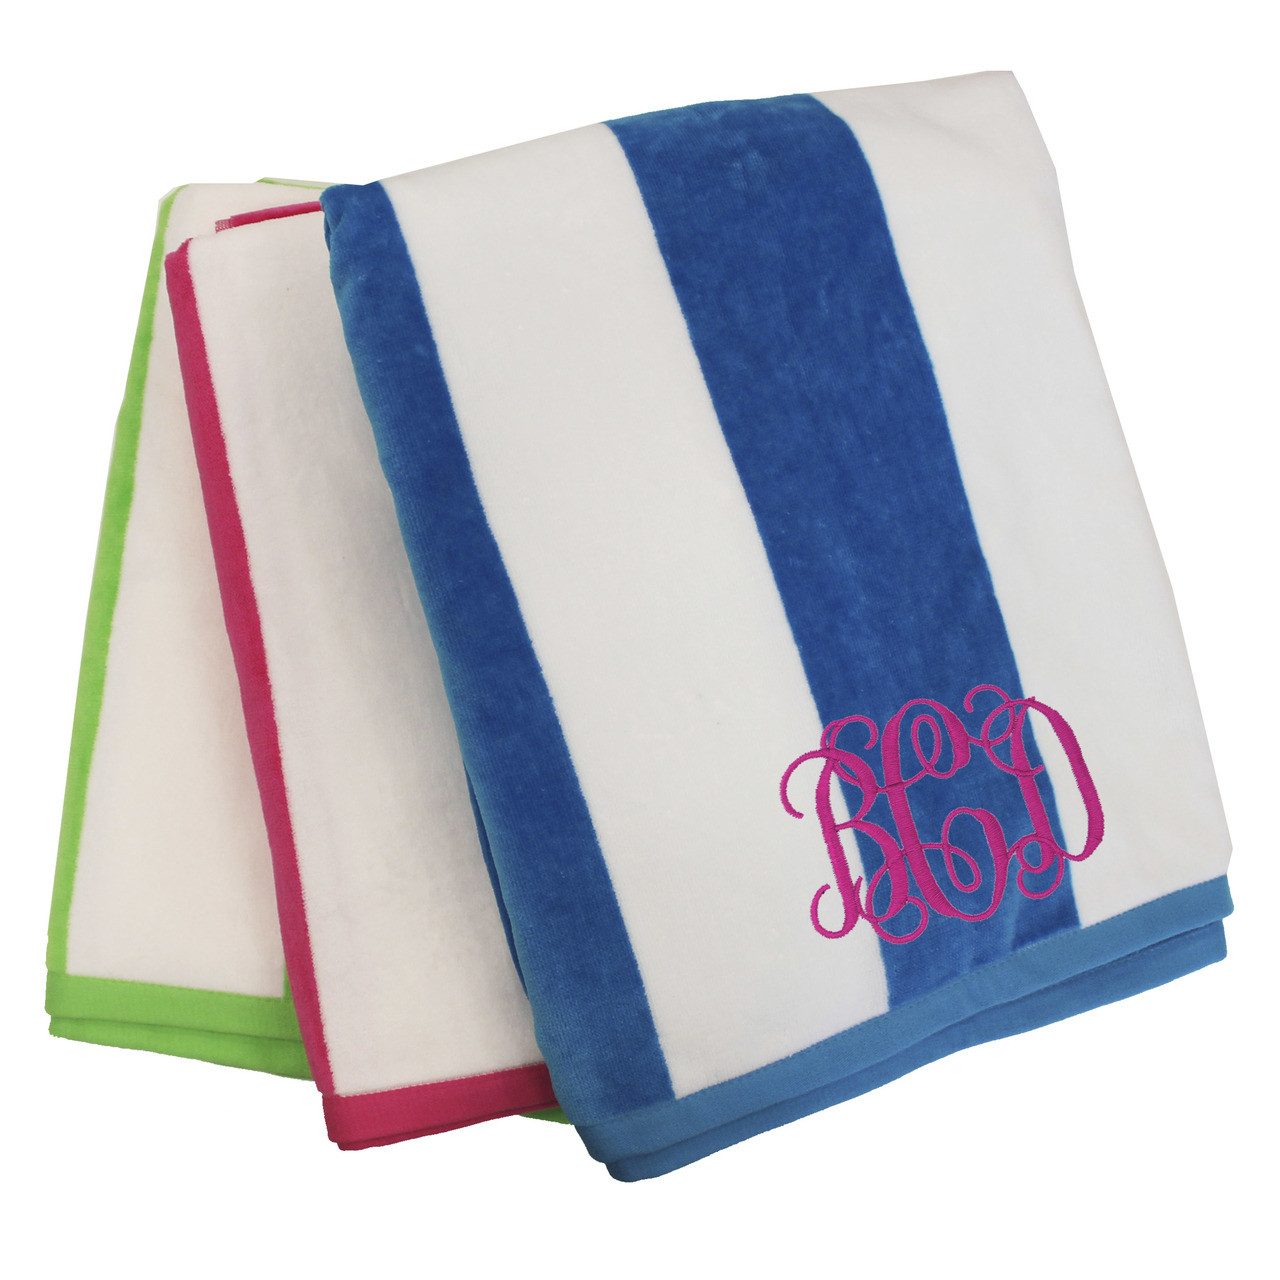 Greek Key Cabana Stripe s Custom Beach Towel / Pool Towel with Personalization / Monogrammed Beach Towel / Personalized Pool Towel / Nautical Chevron Lime or ANY Color